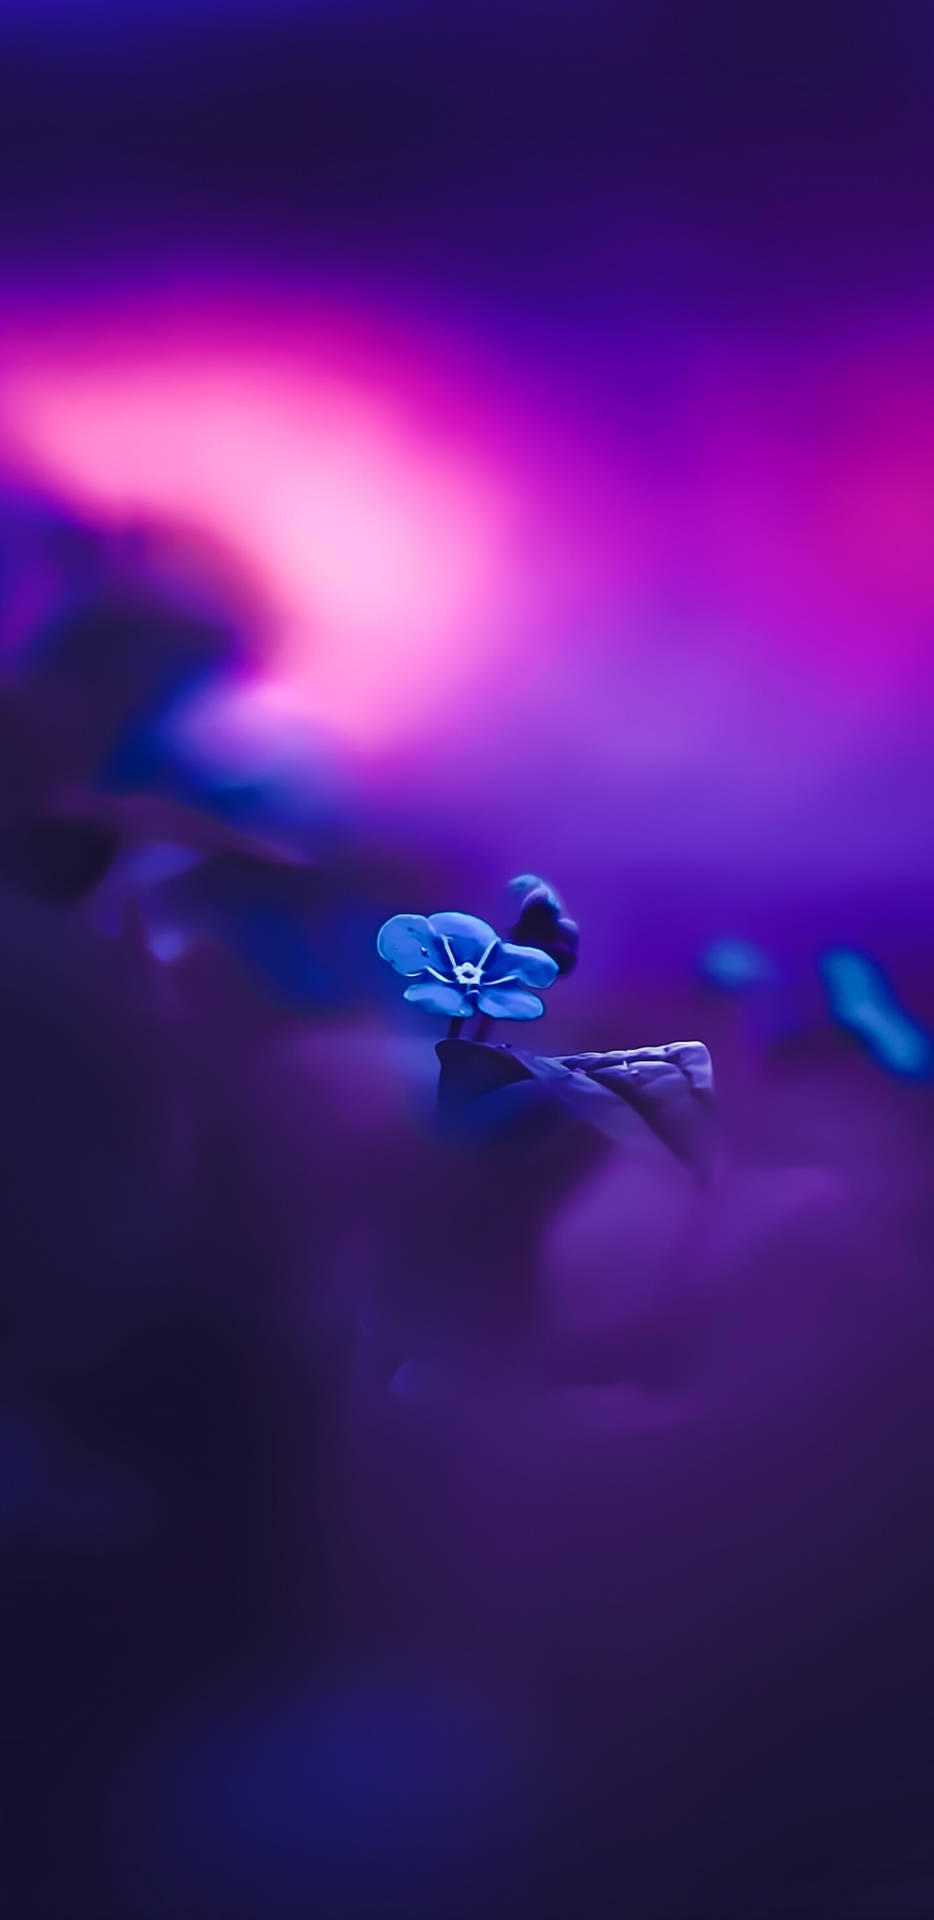 Pixel 3 Xl Blue Flower Focus Shot Background